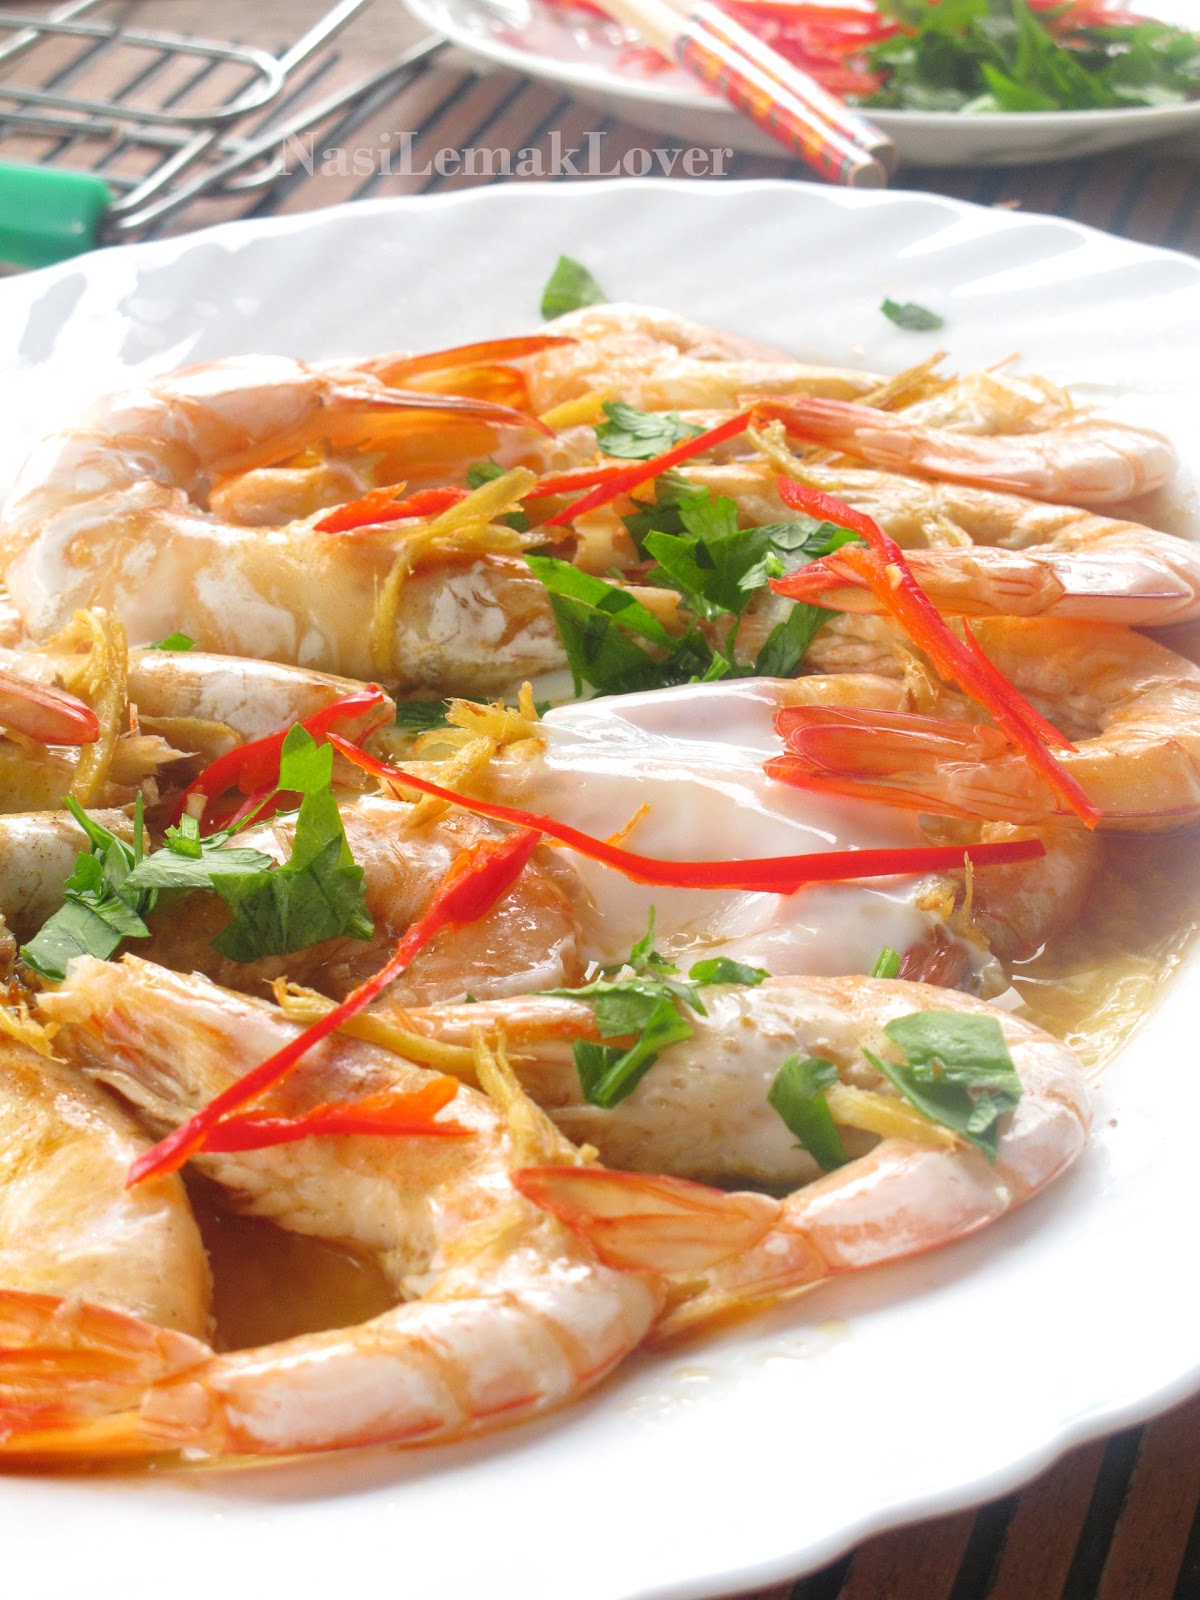 Nasi Lemak Lover: Chinese steamed prawns with egg white